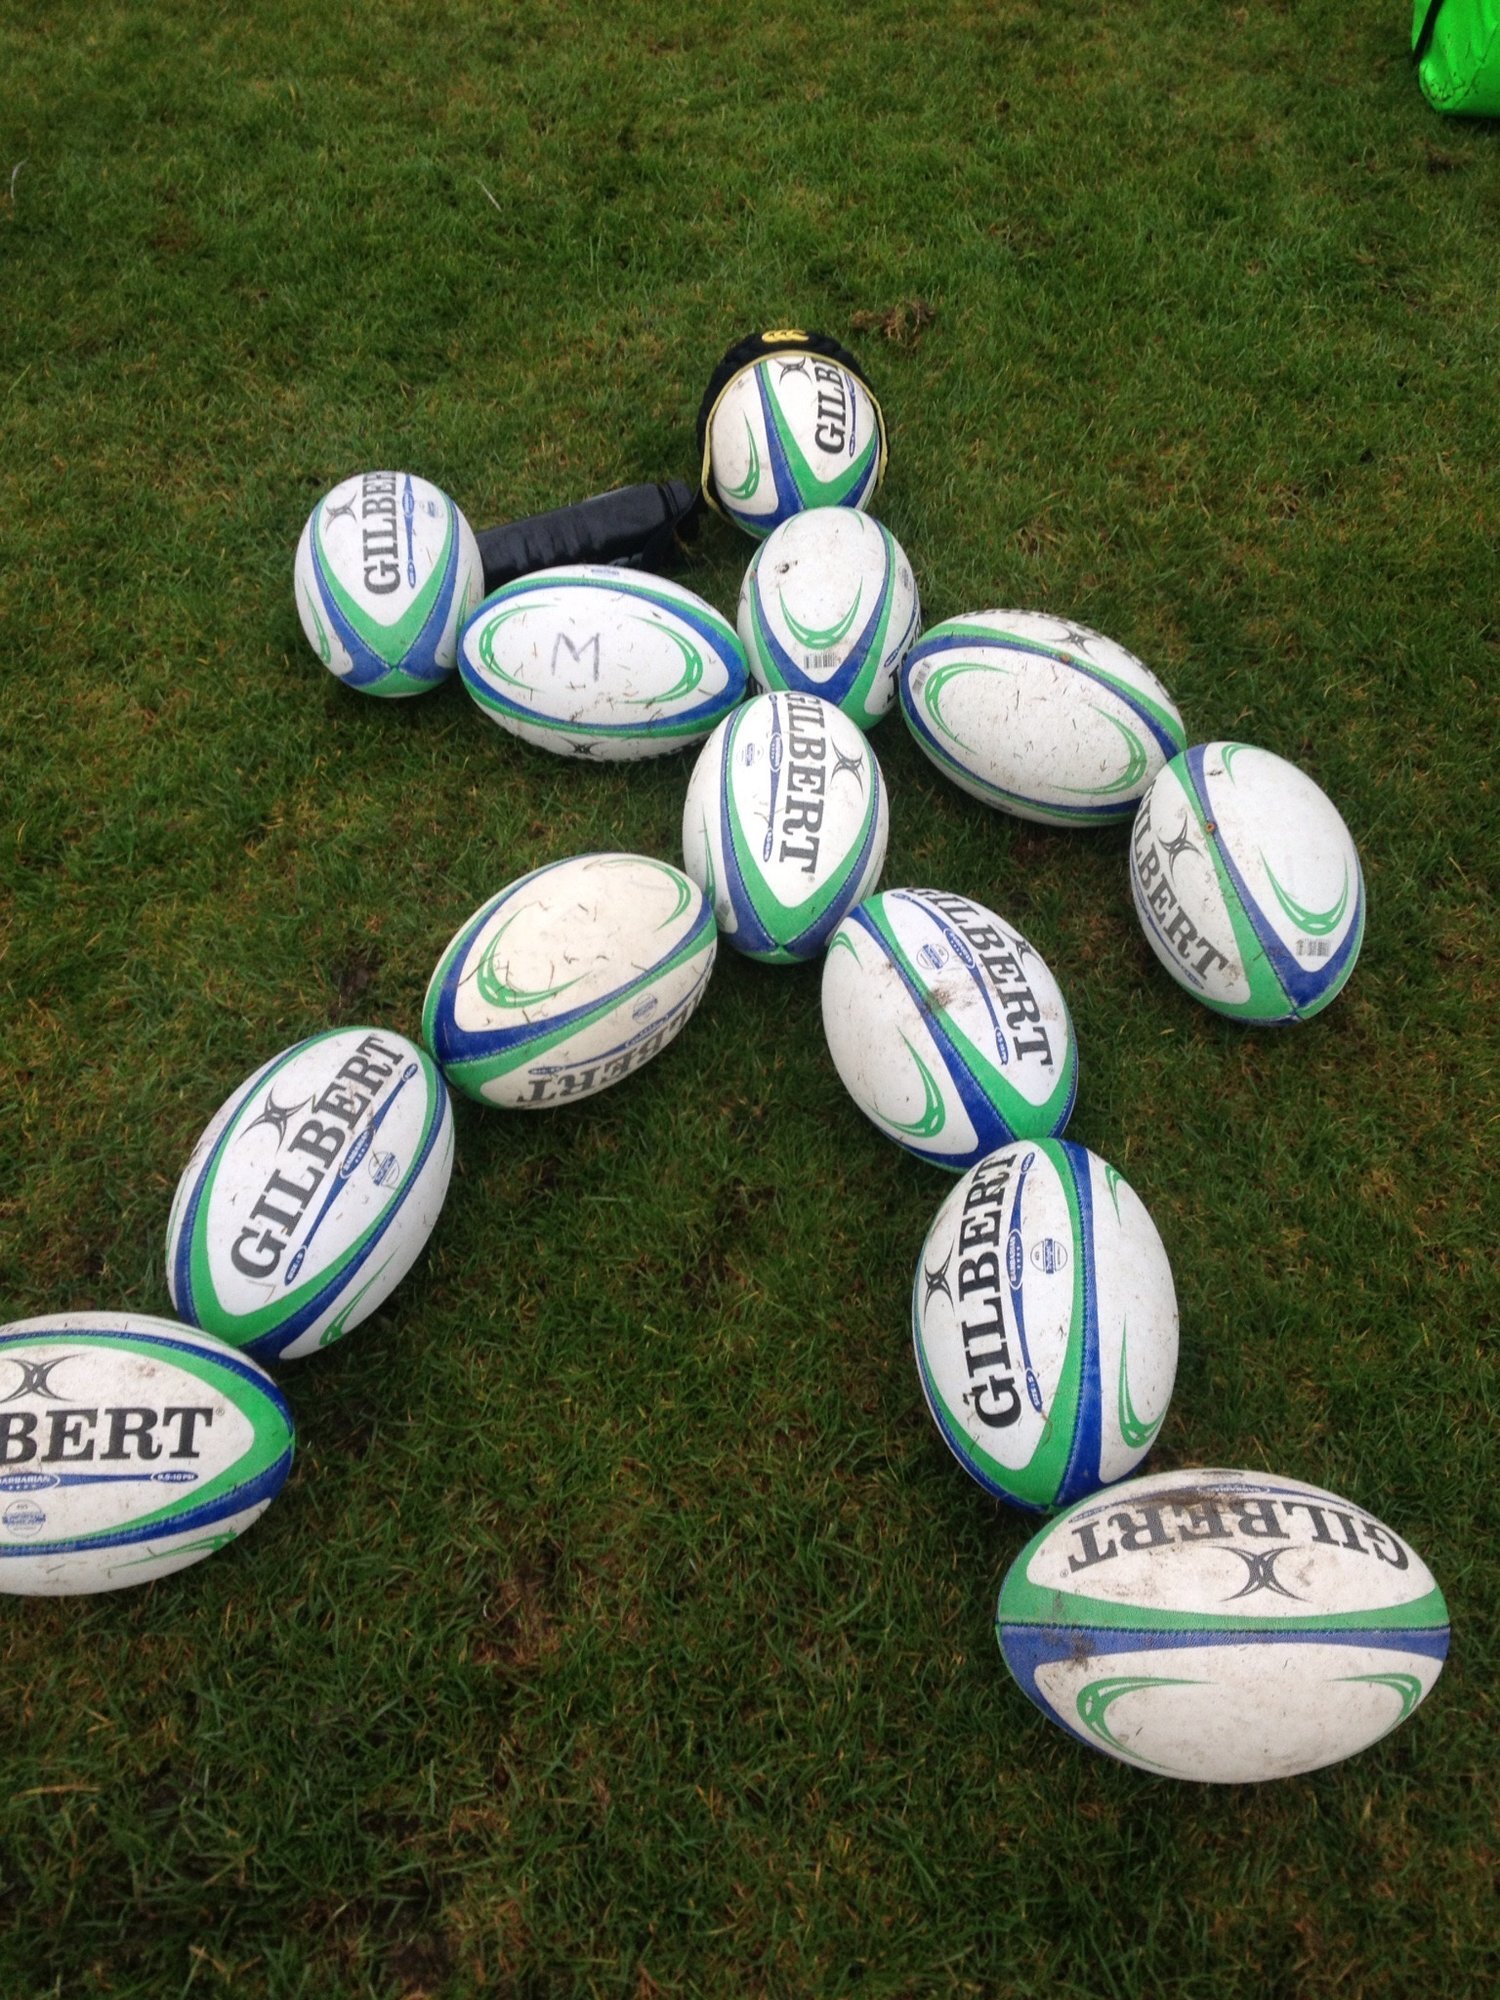 rugby balls.jpg